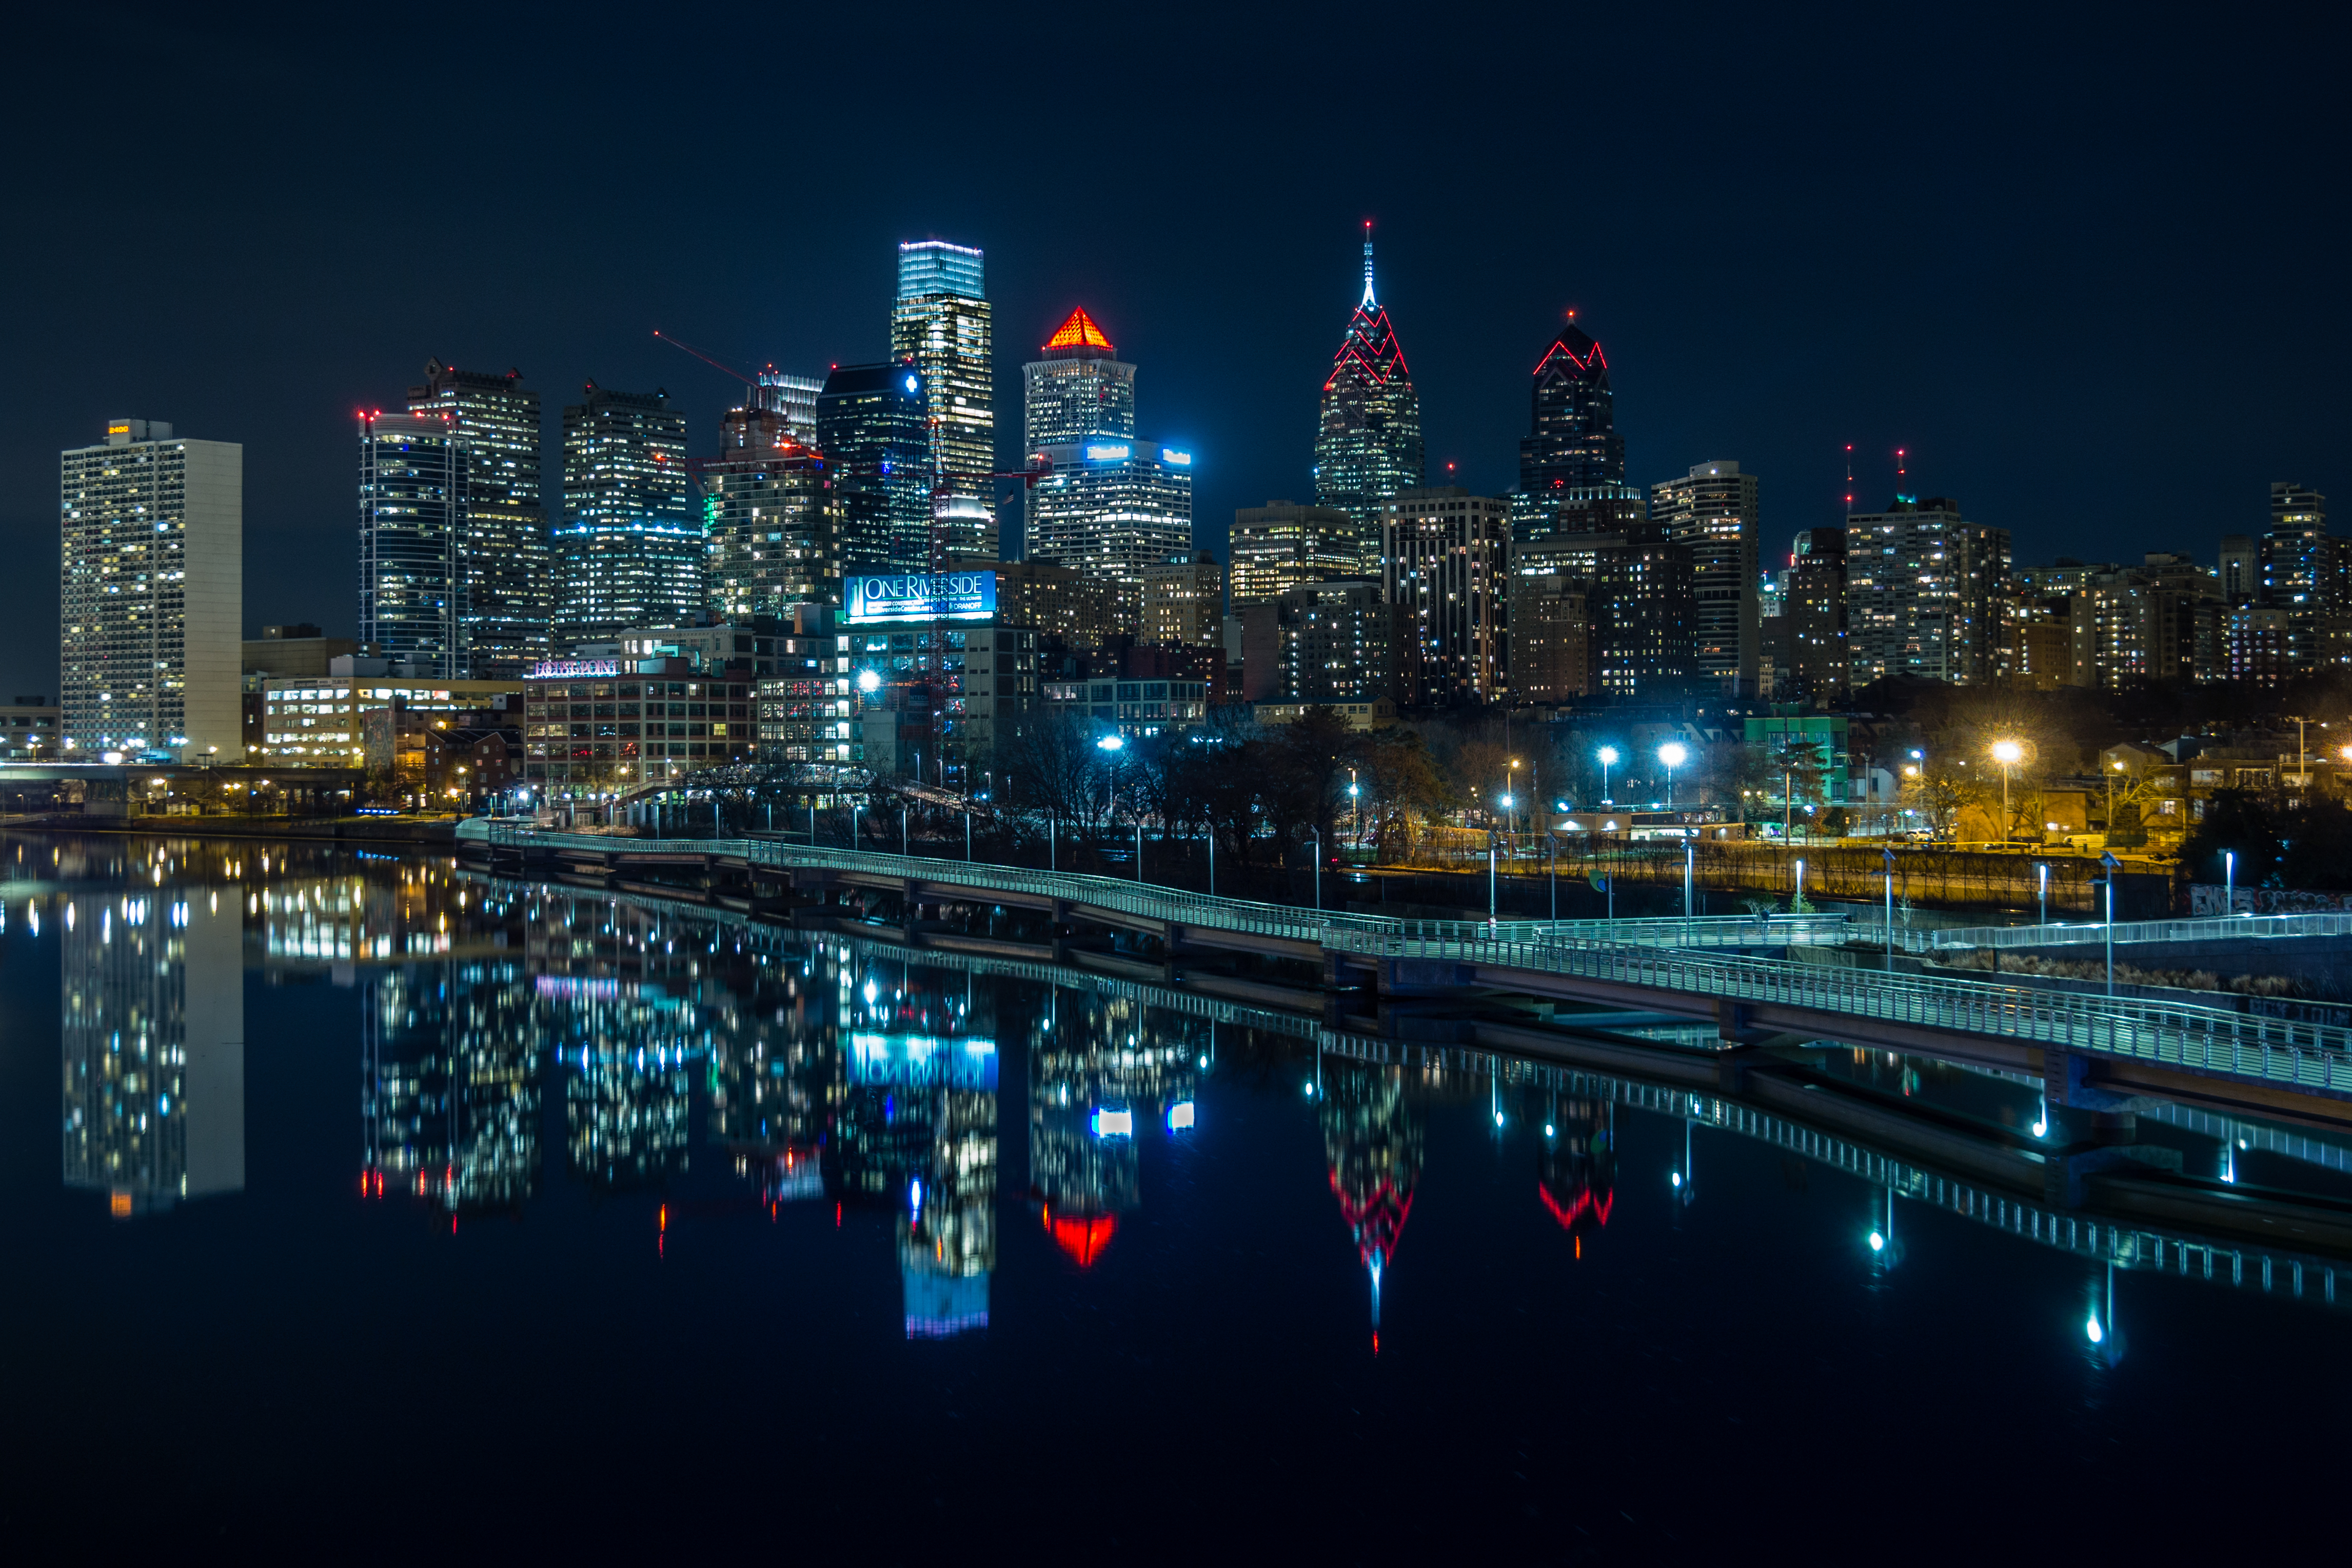 Night City Reflection by Tyler Sprague